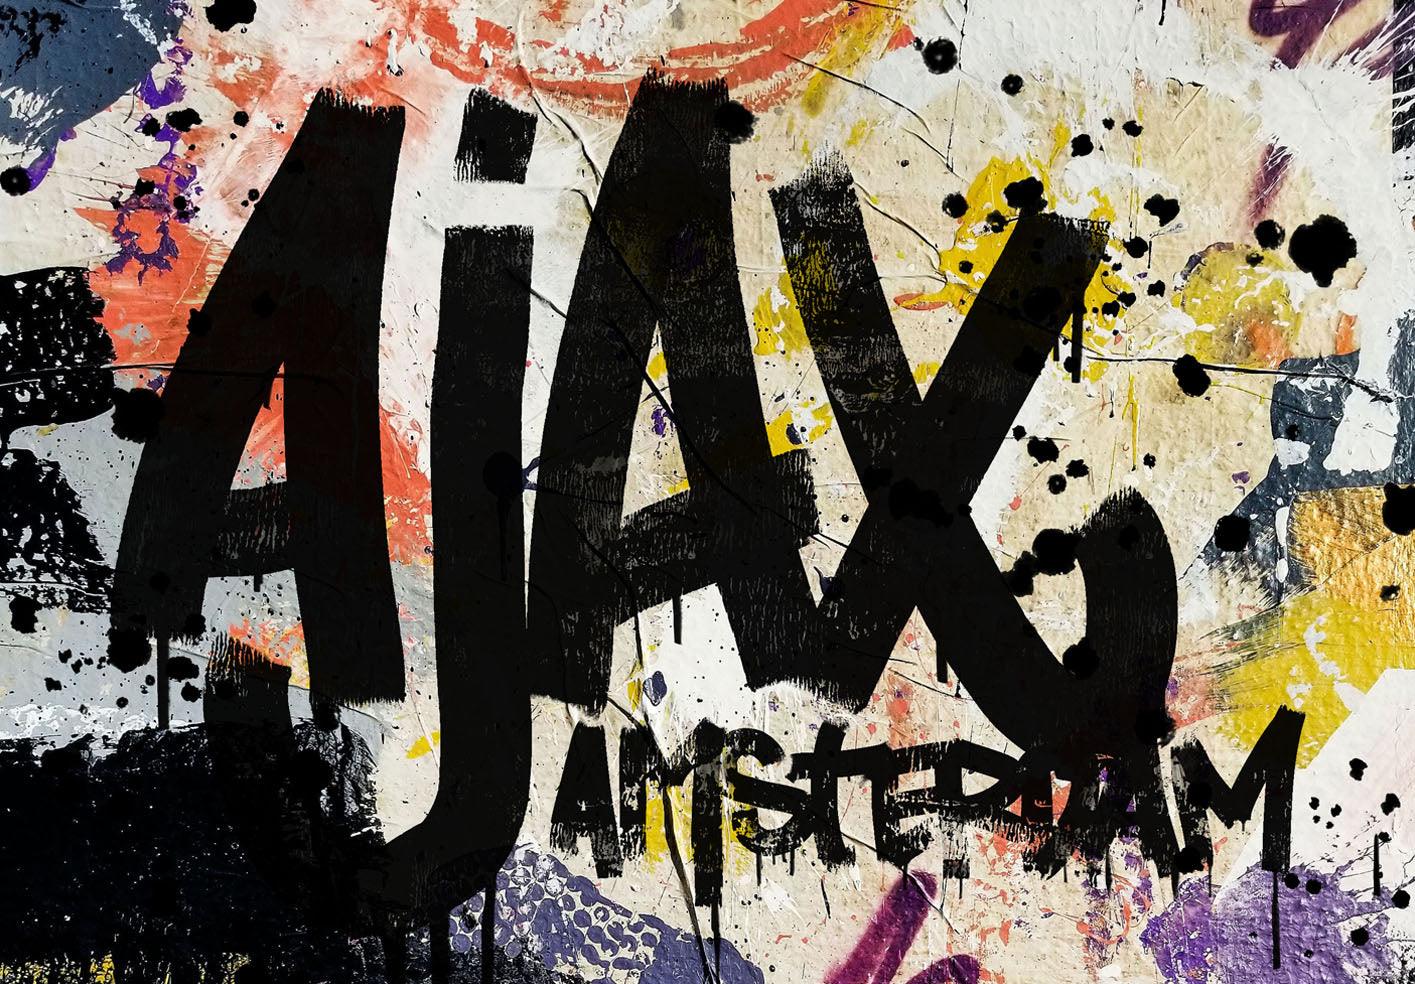 Graffiti Ajax Amsterdam - Hans Breuker